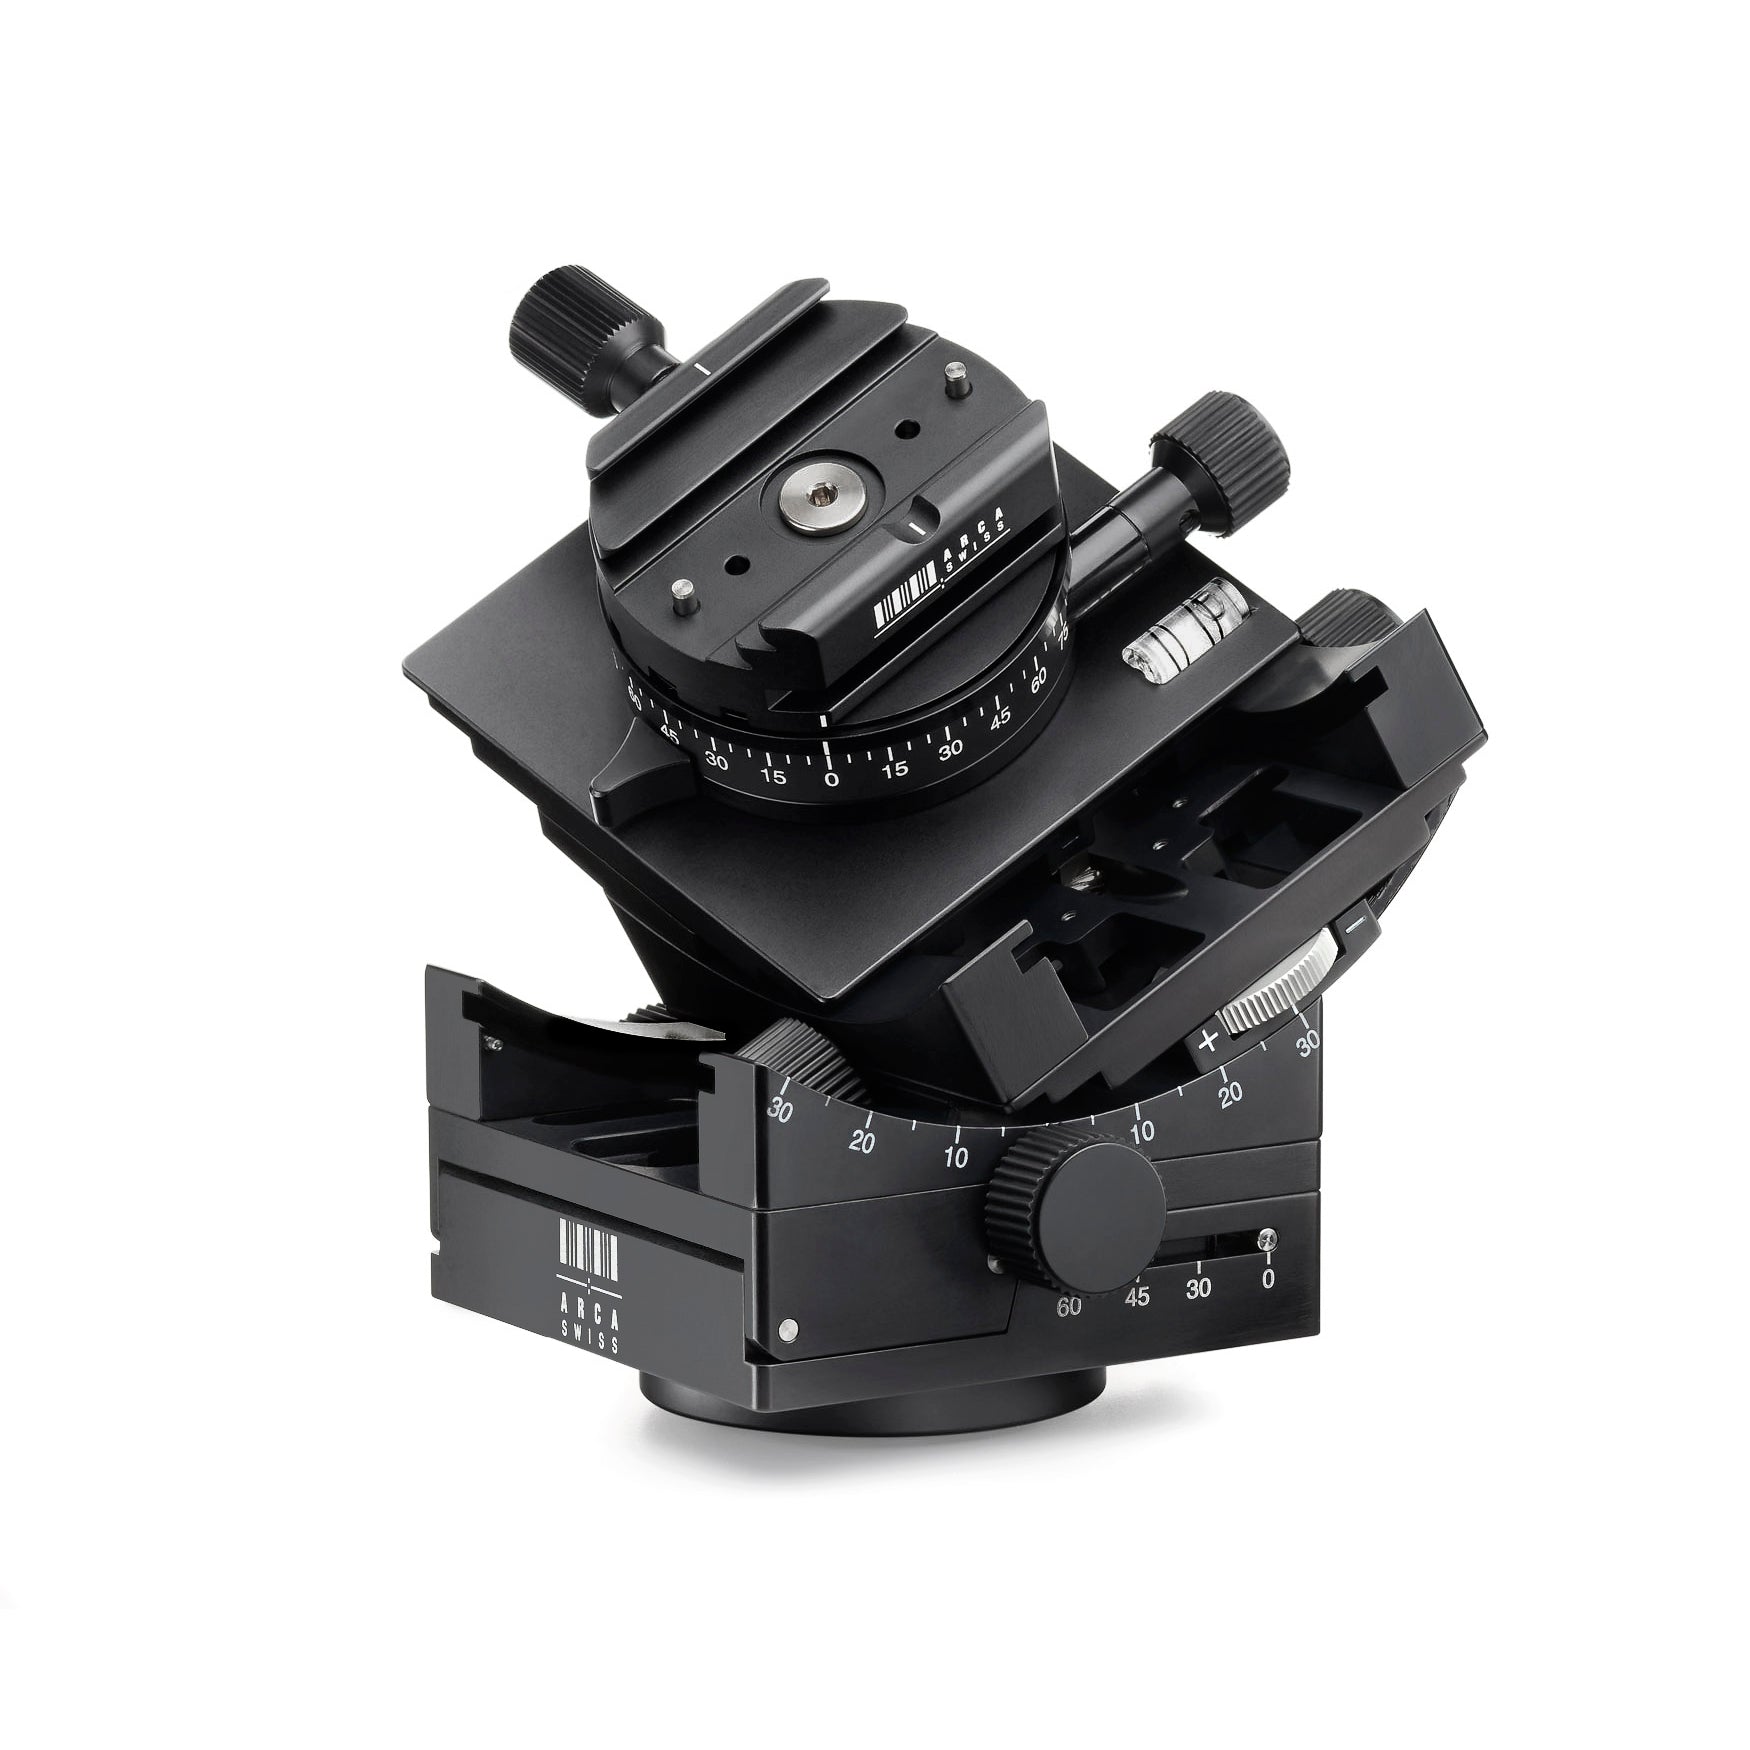 C1 Cube gp (geared with geared panning) tripod head – ARCA-SWISS USA